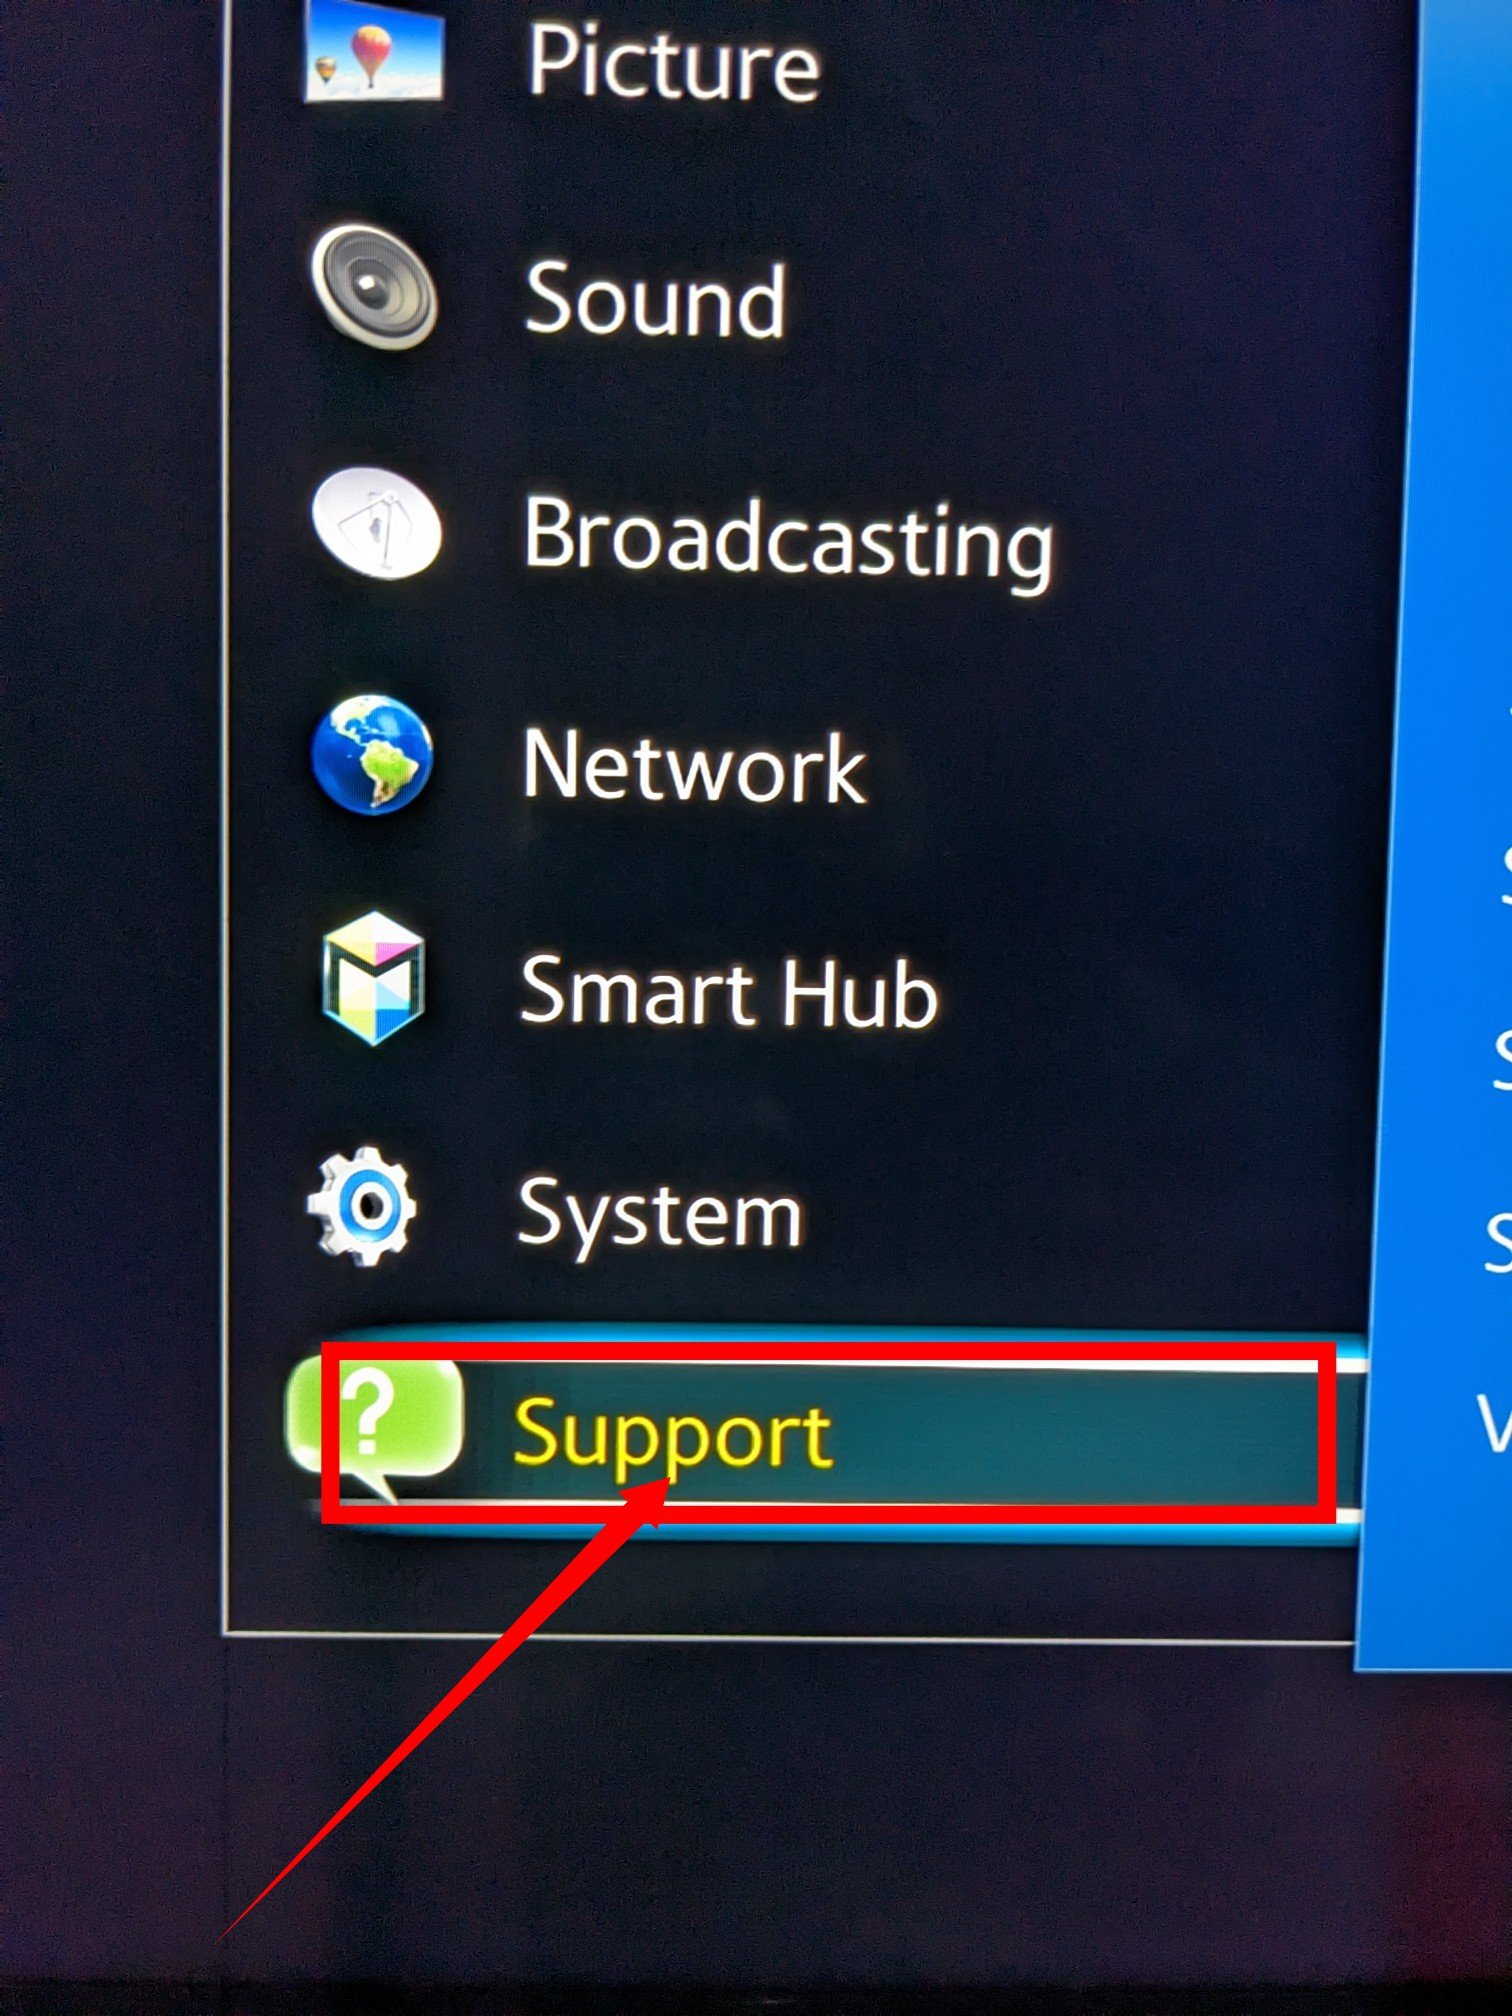 Support on Samsung smart TV 